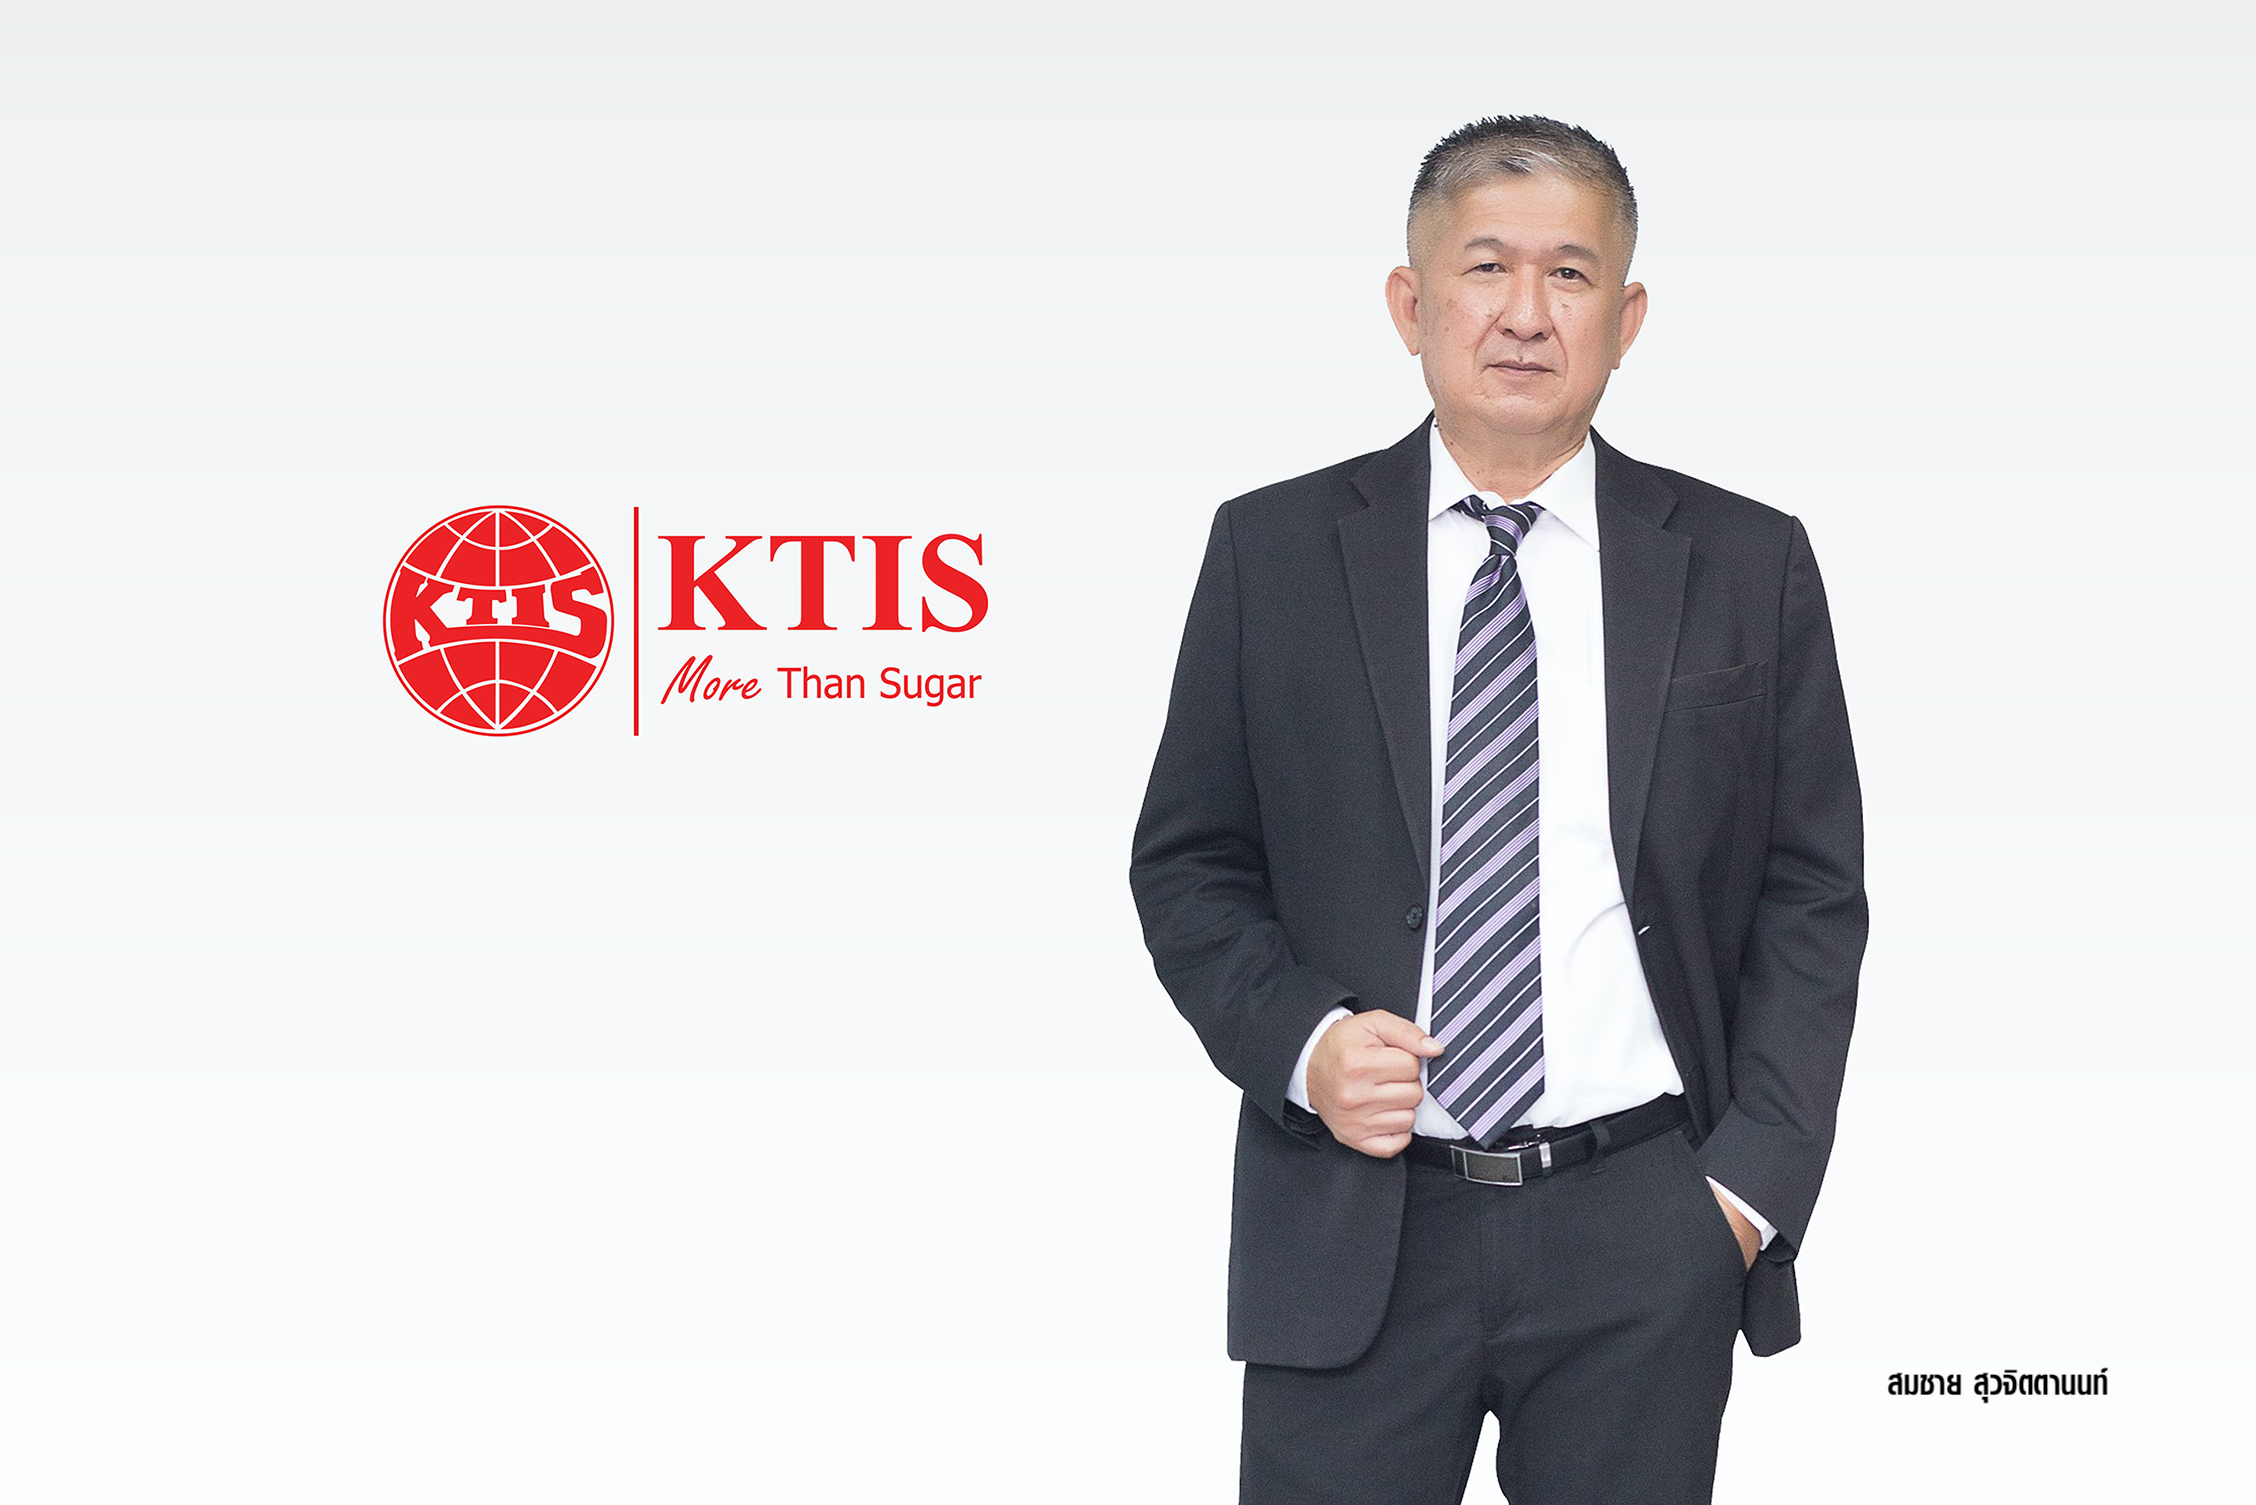 KTIS ปลื้มอ้อยคุณภาพสูงขึ้น ผลิตน้ำตาลได้แล้วกว่า 7 ล้านกระสอบ